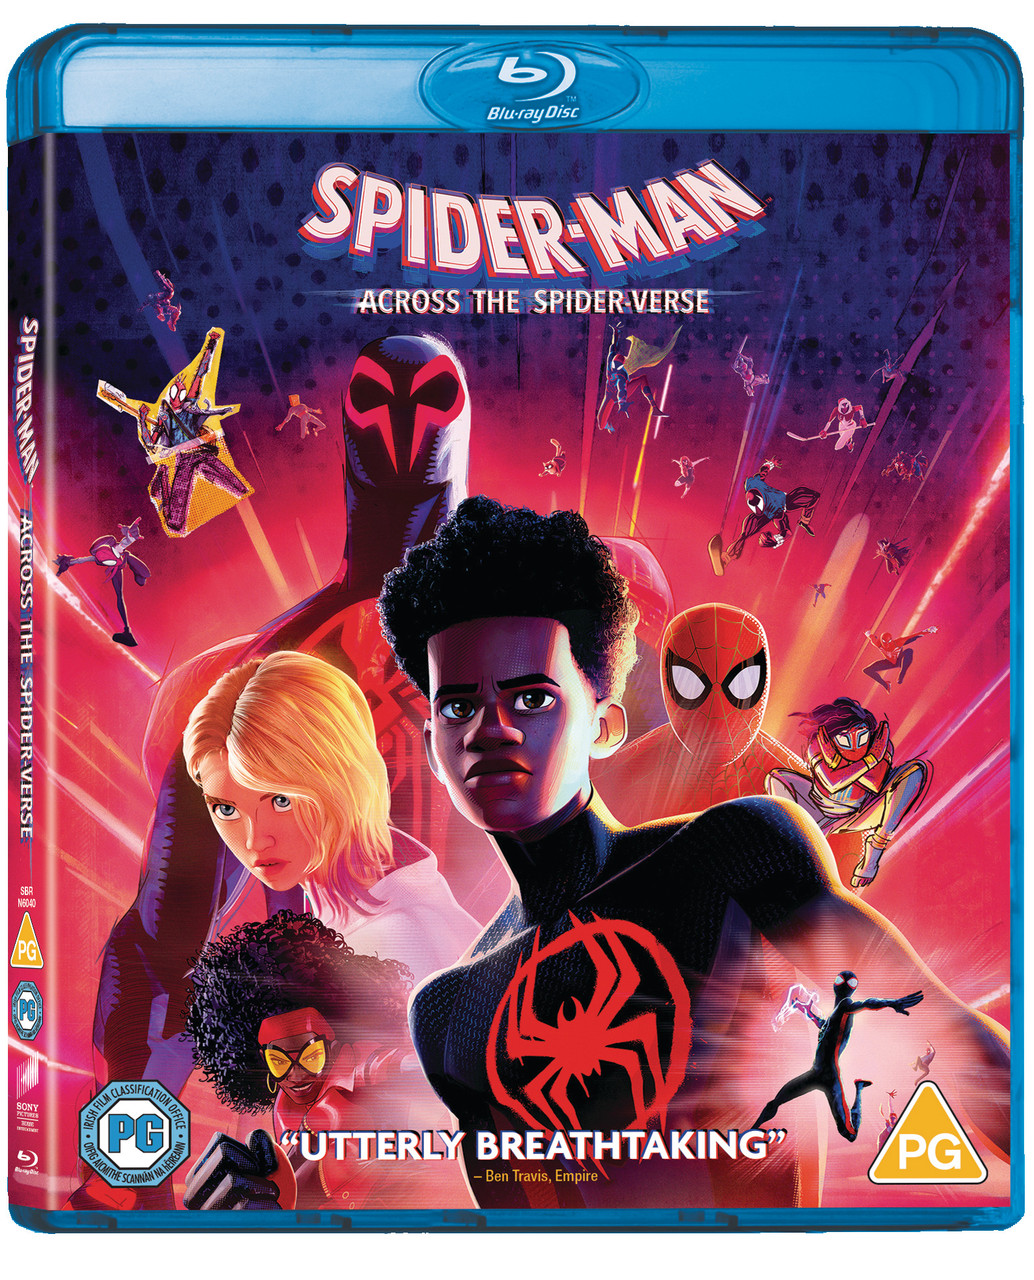 Promo Dvd elementaire ou dvd spiderman:across the spider-verse chez Hyper U